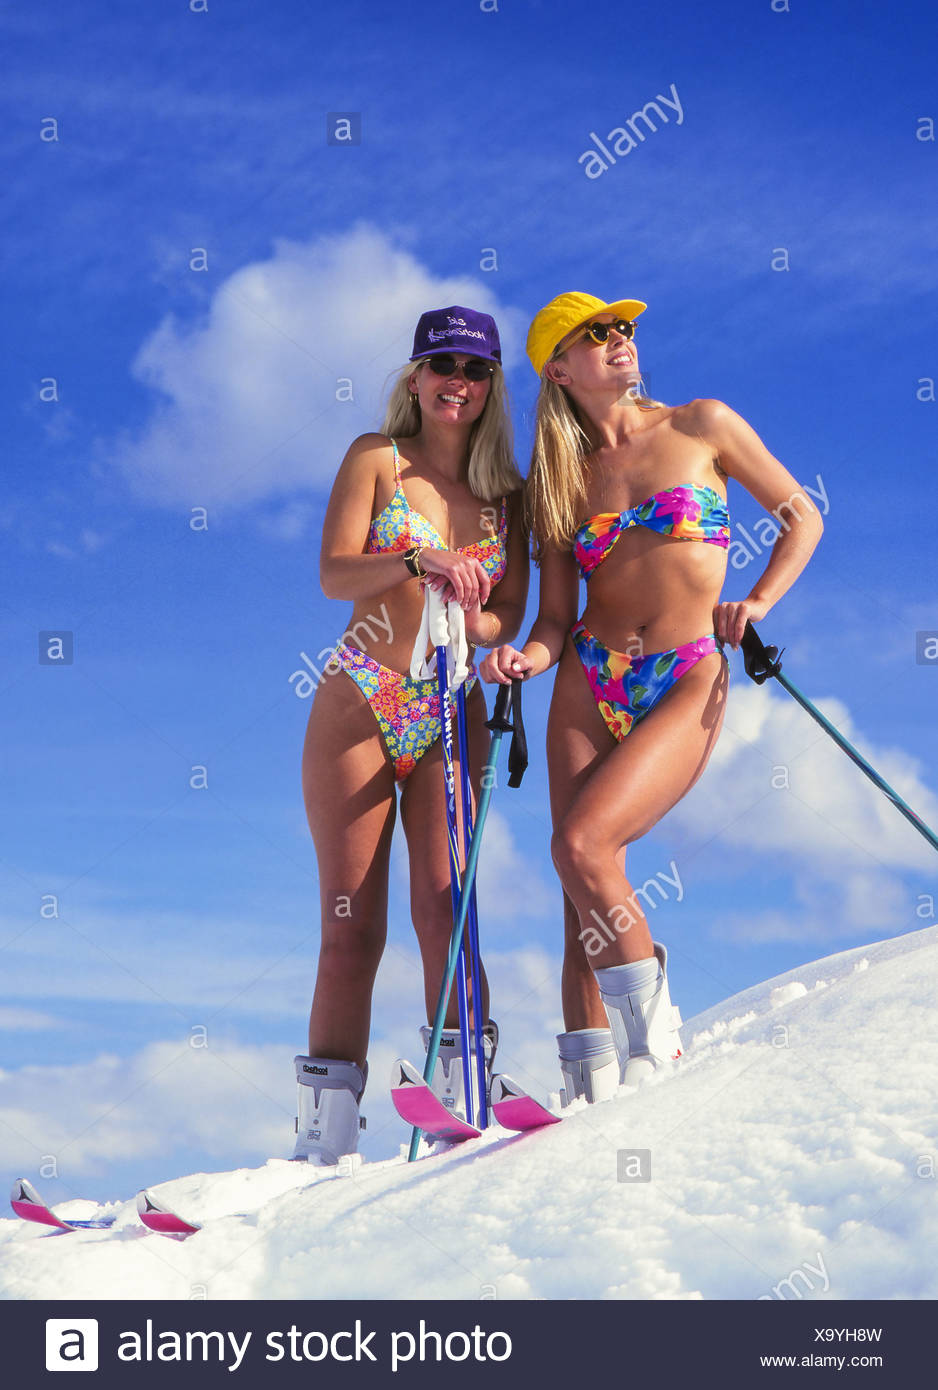 Girls skiing in bikinis Snow Bikini High Resolution Stock Photography And Images Alamy